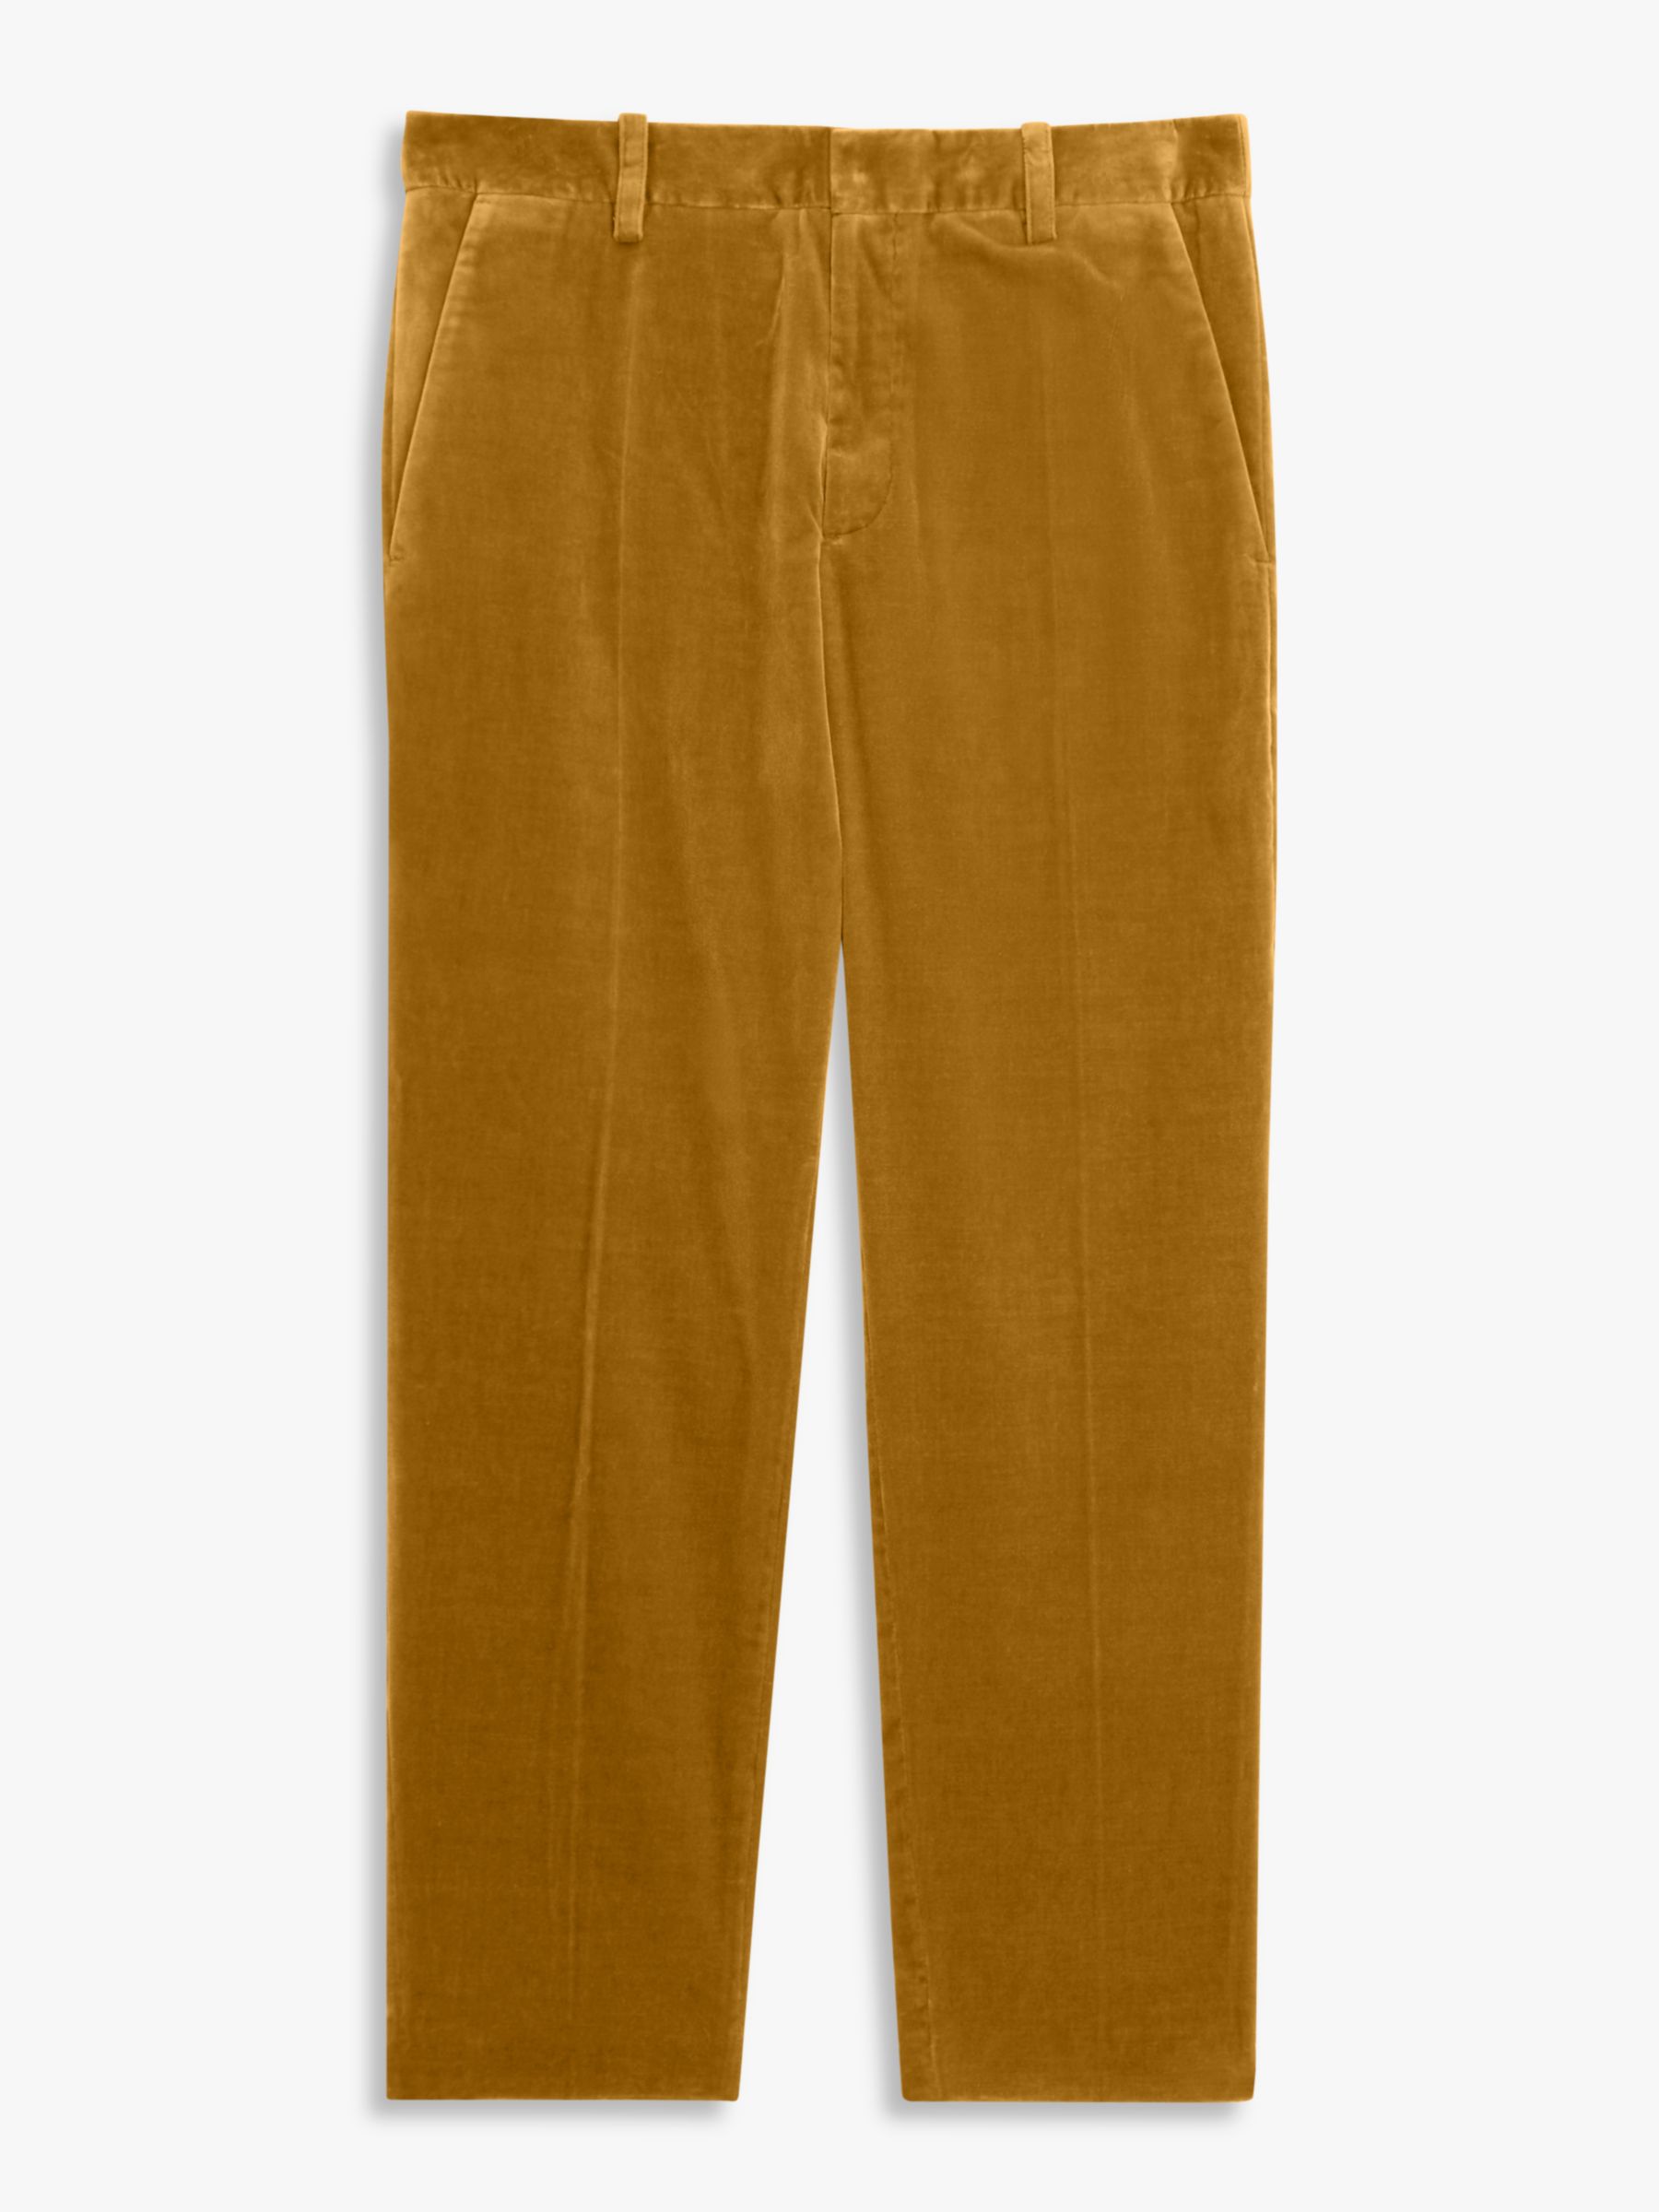 Stefanel TROUSERS IN VELVET - Trousers - yellow/gold-coloured - Zalando.de